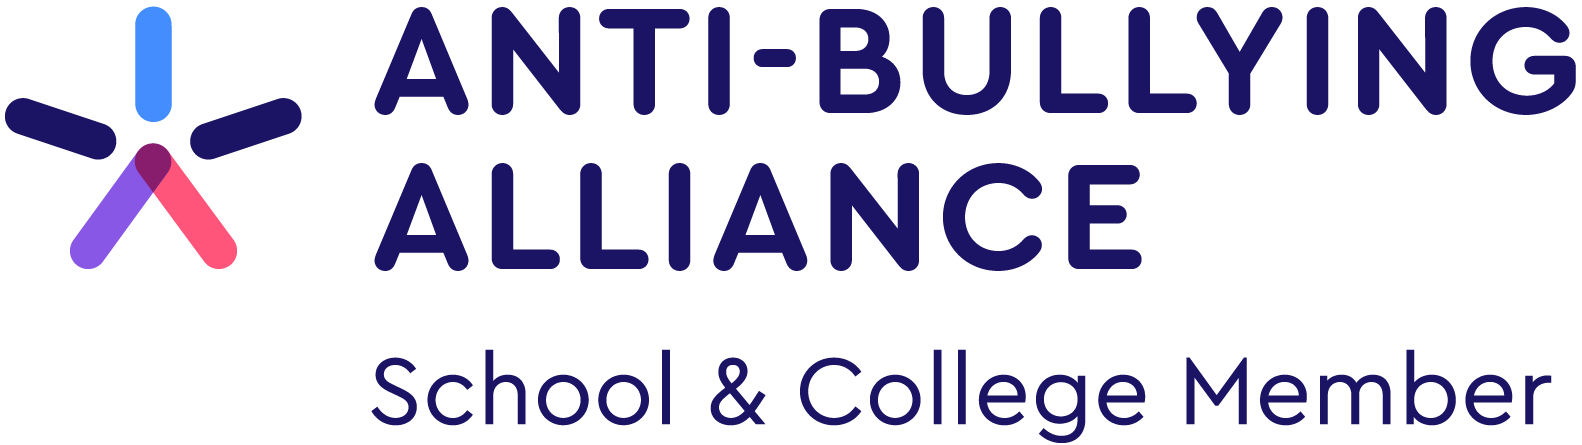 Anti-bullying alliance logo